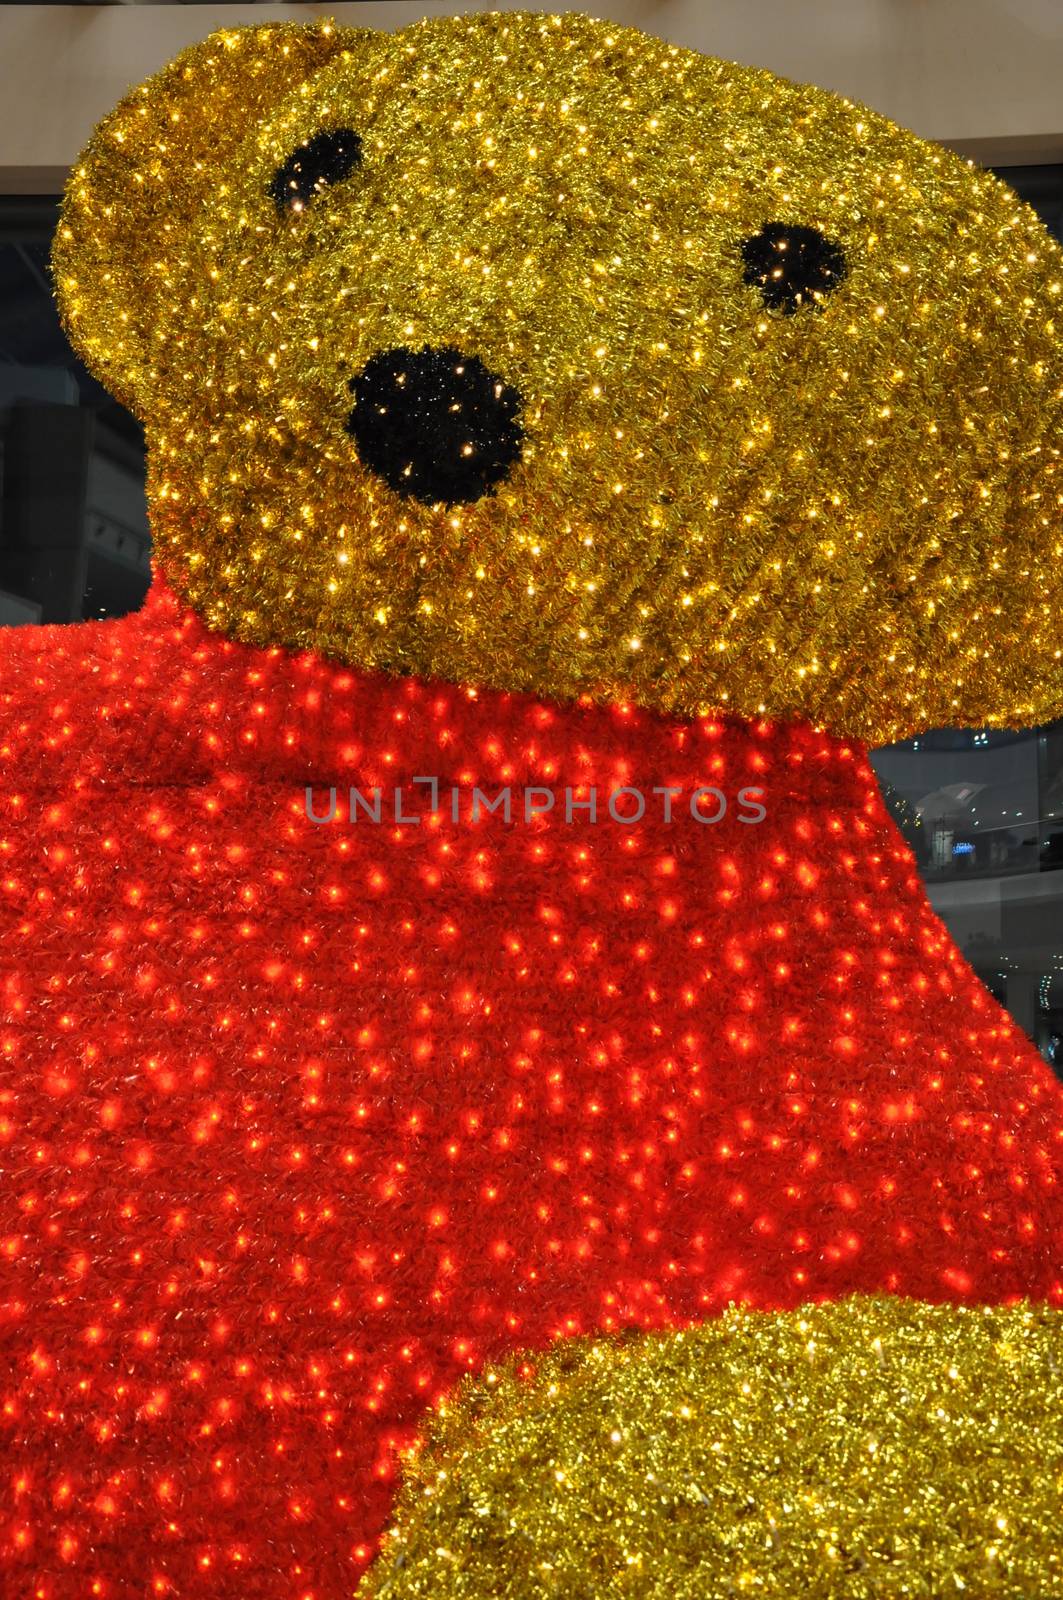 Teddy Bear at Festival Centre Mall in Dubai, UAE by sainaniritu